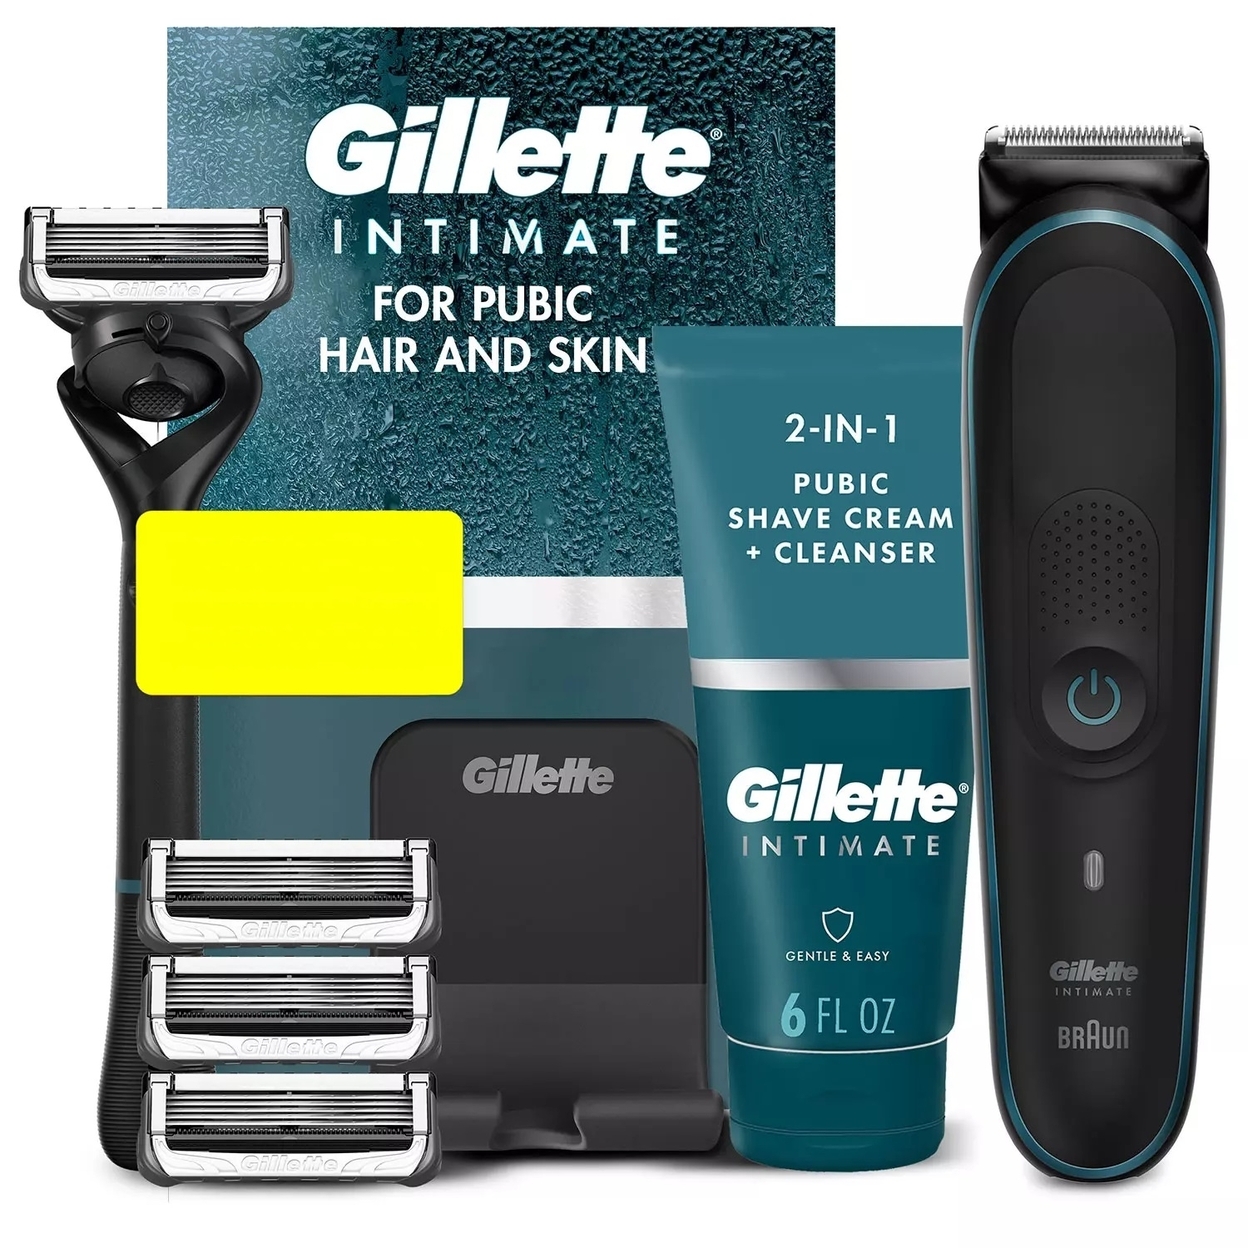 Gillette Intimate Men’s Pubic Hair Grooming Kit